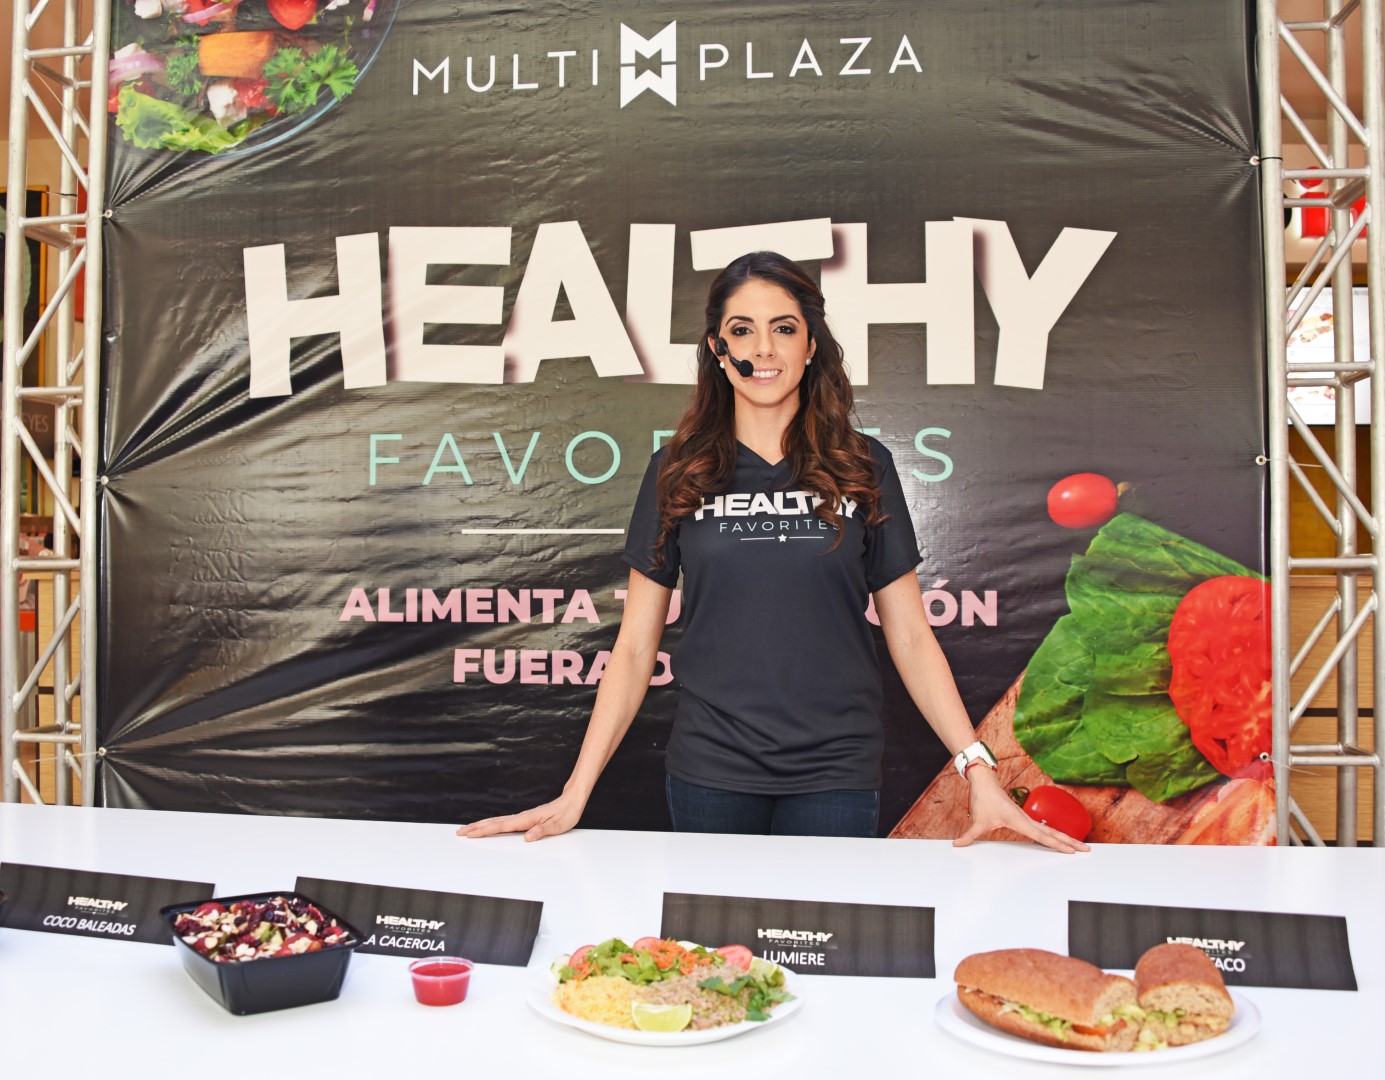 Multiplaza promueve la comida saludable de su Foodcourt con Healthy Favorites